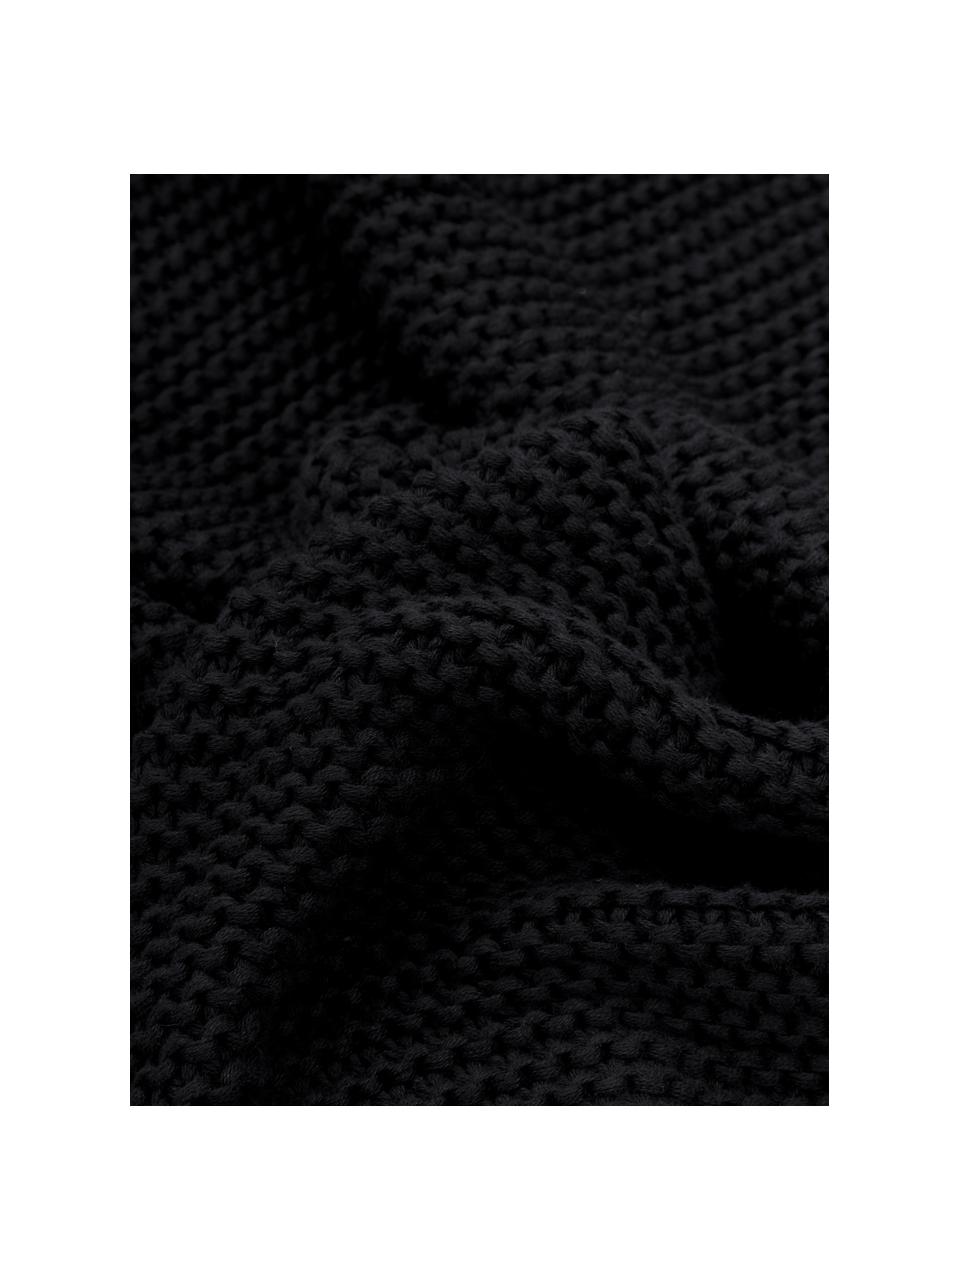 Gebreide plaid Adalyn van biokatoen in zwart, 100% biokatoen, Zwart, B 150 x L 200 cm